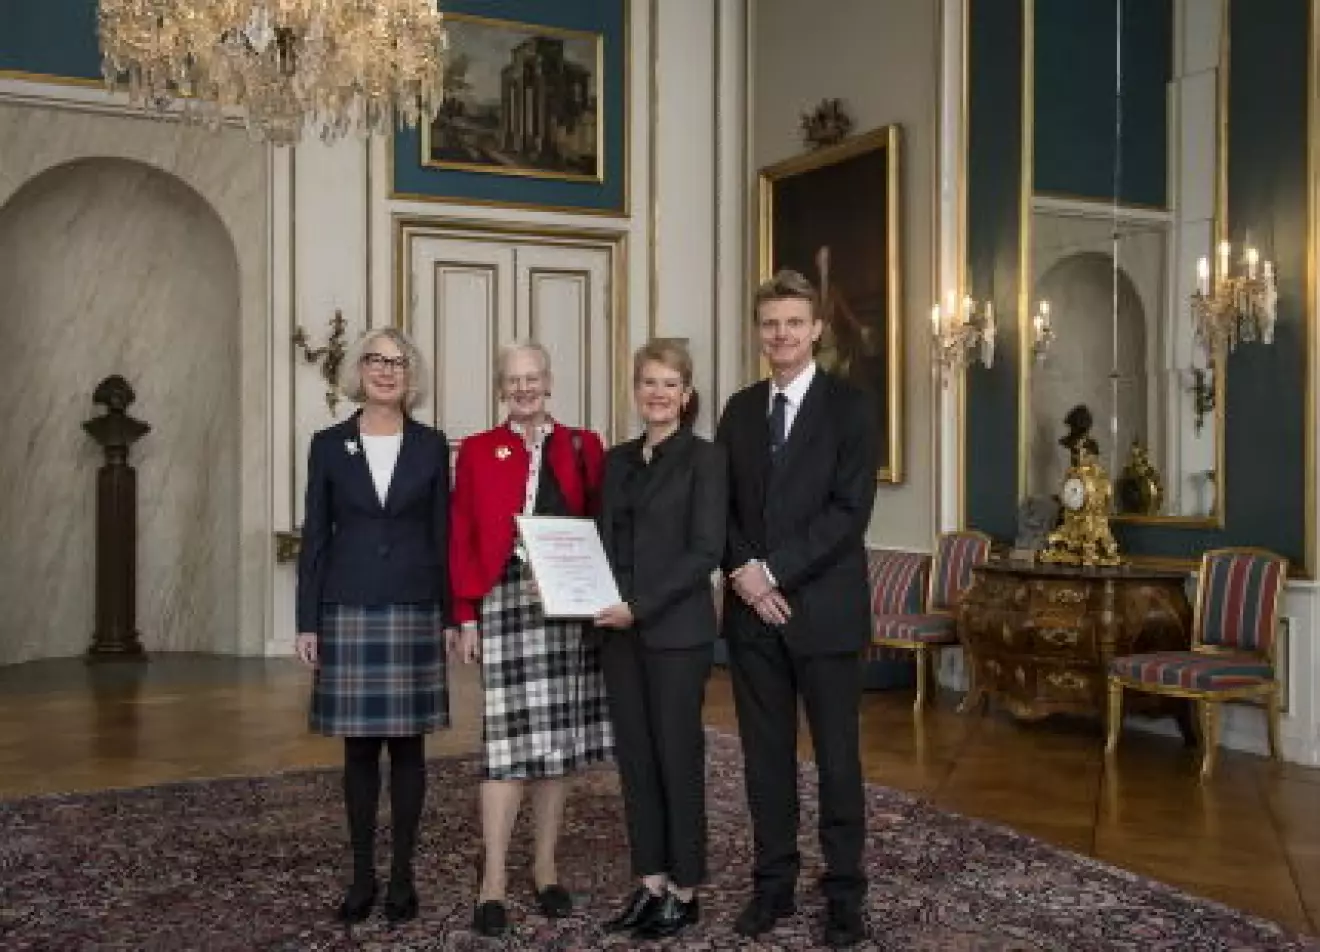 Queen Margrethe presents rheumatism science award